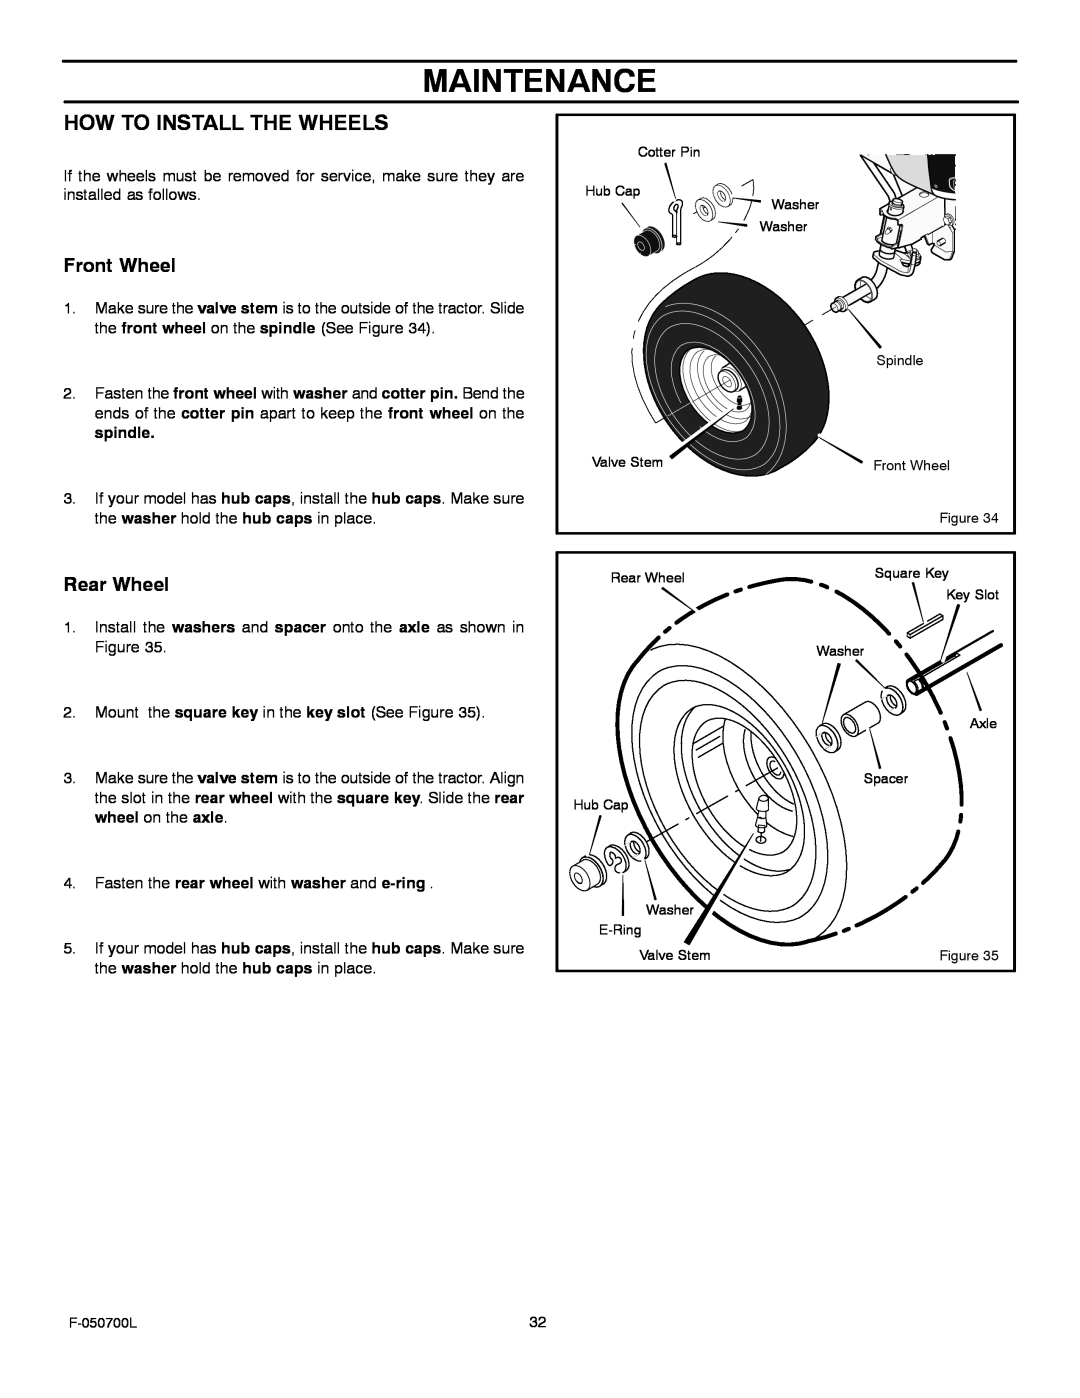 Murray 405000x8E manual Maintenance, How To Install The Wheels, Front Wheel, Rear Wheel 